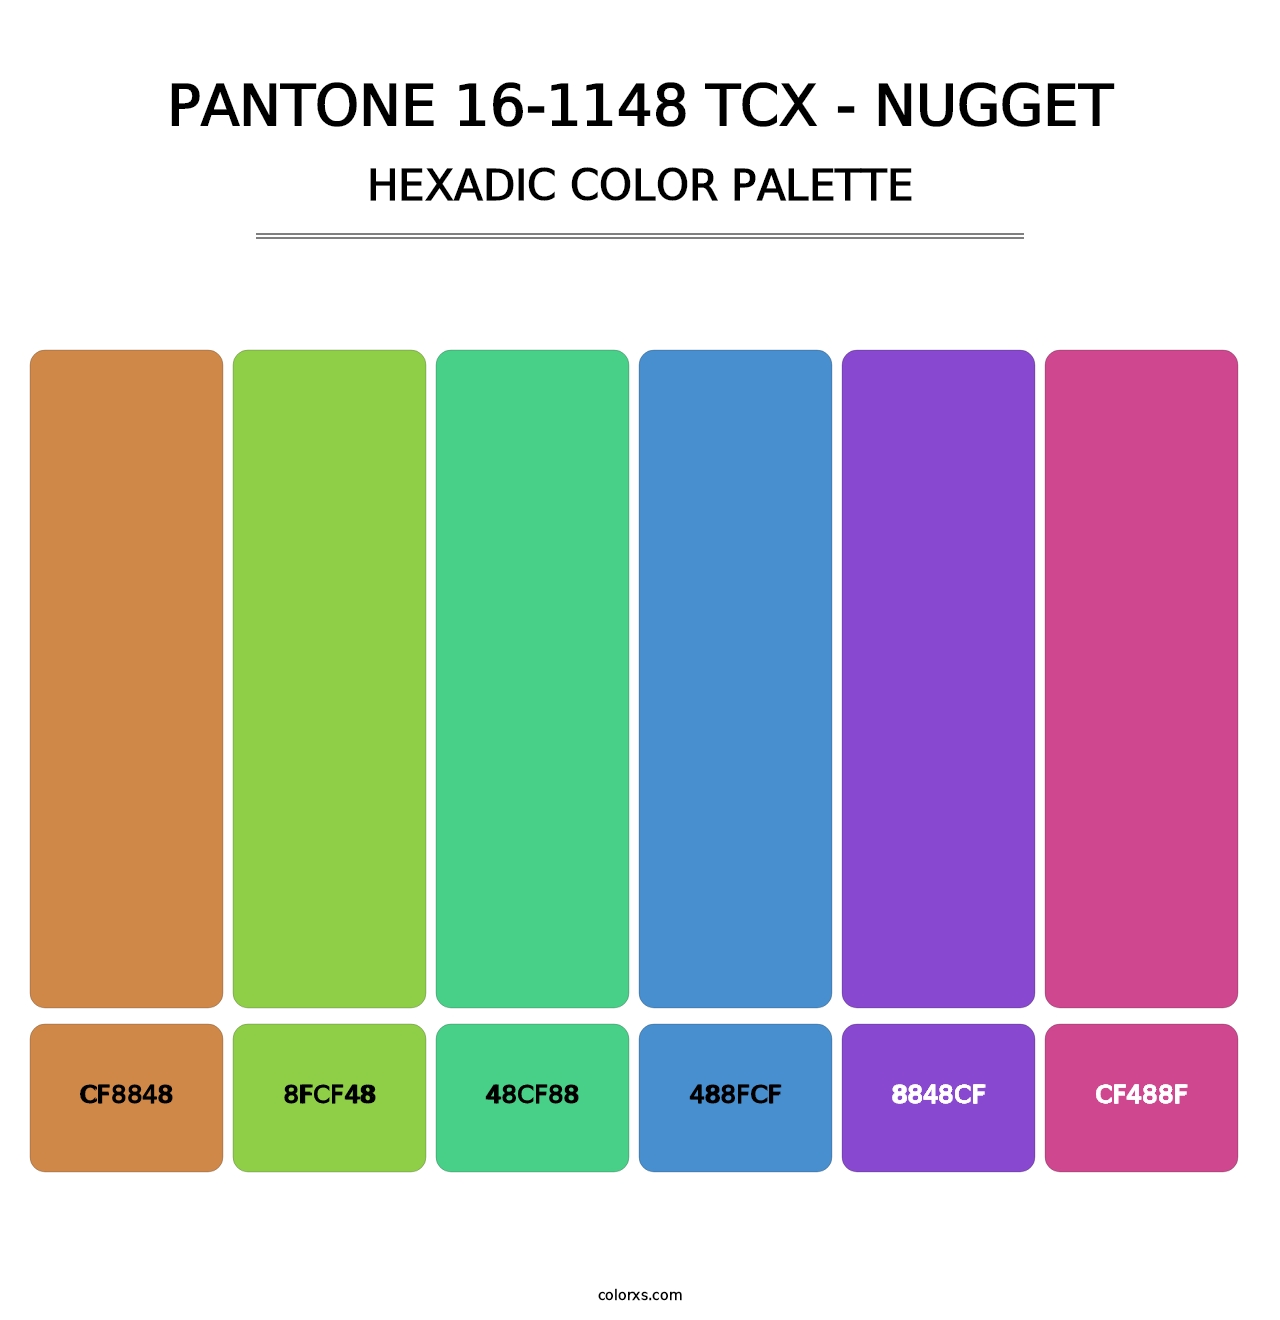 PANTONE 16-1148 TCX - Nugget - Hexadic Color Palette